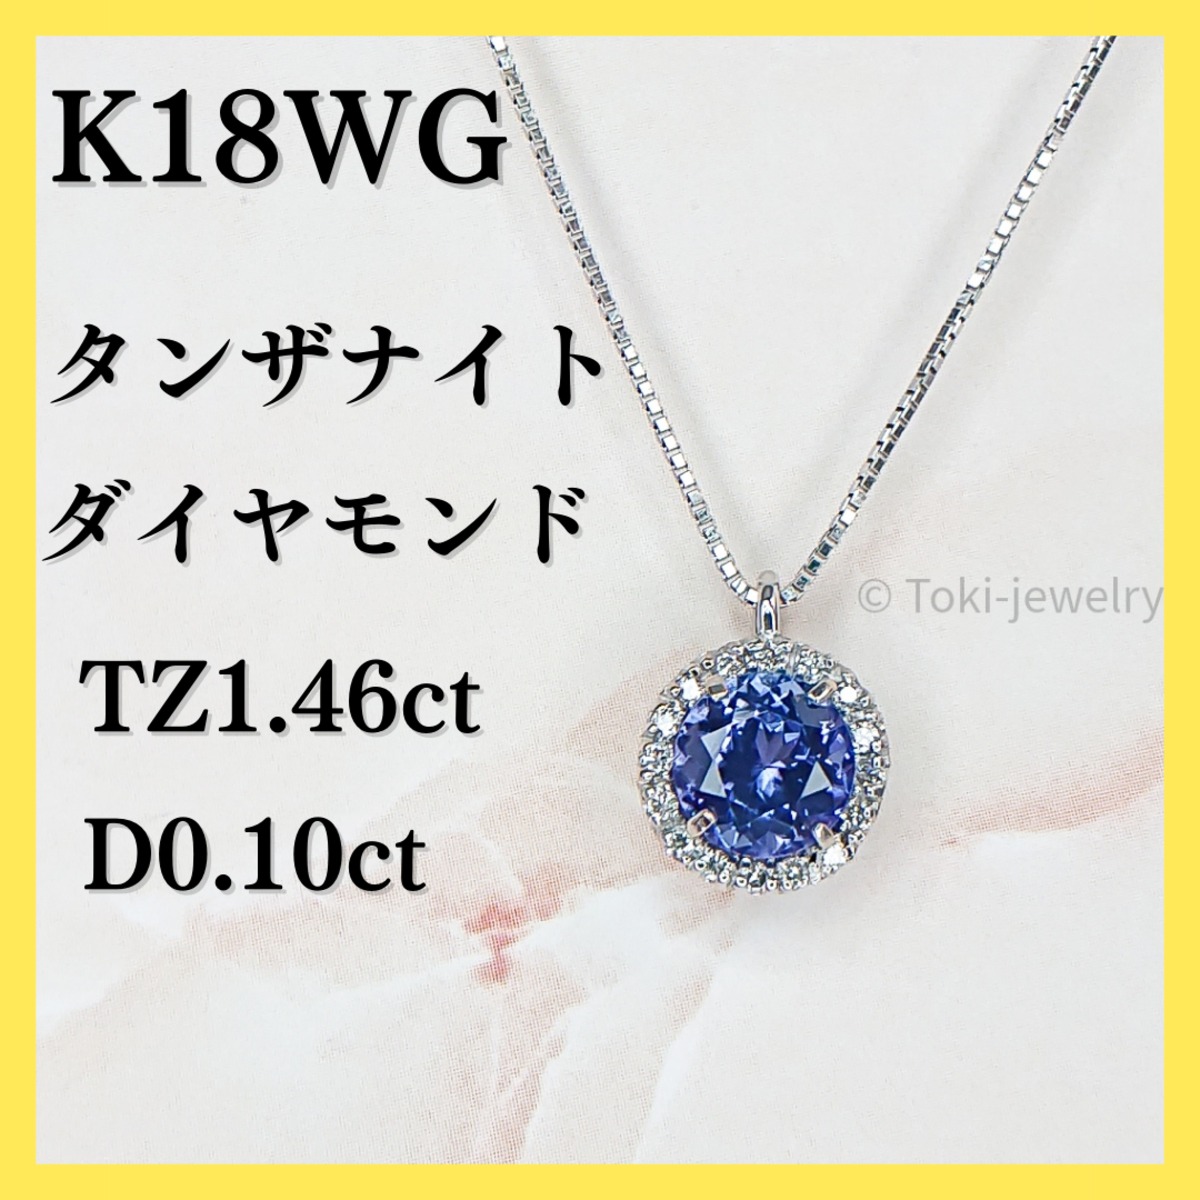 K18WG タンザナイト/ダイヤモンド ネックレス 1ctアップ | toki-jewelry